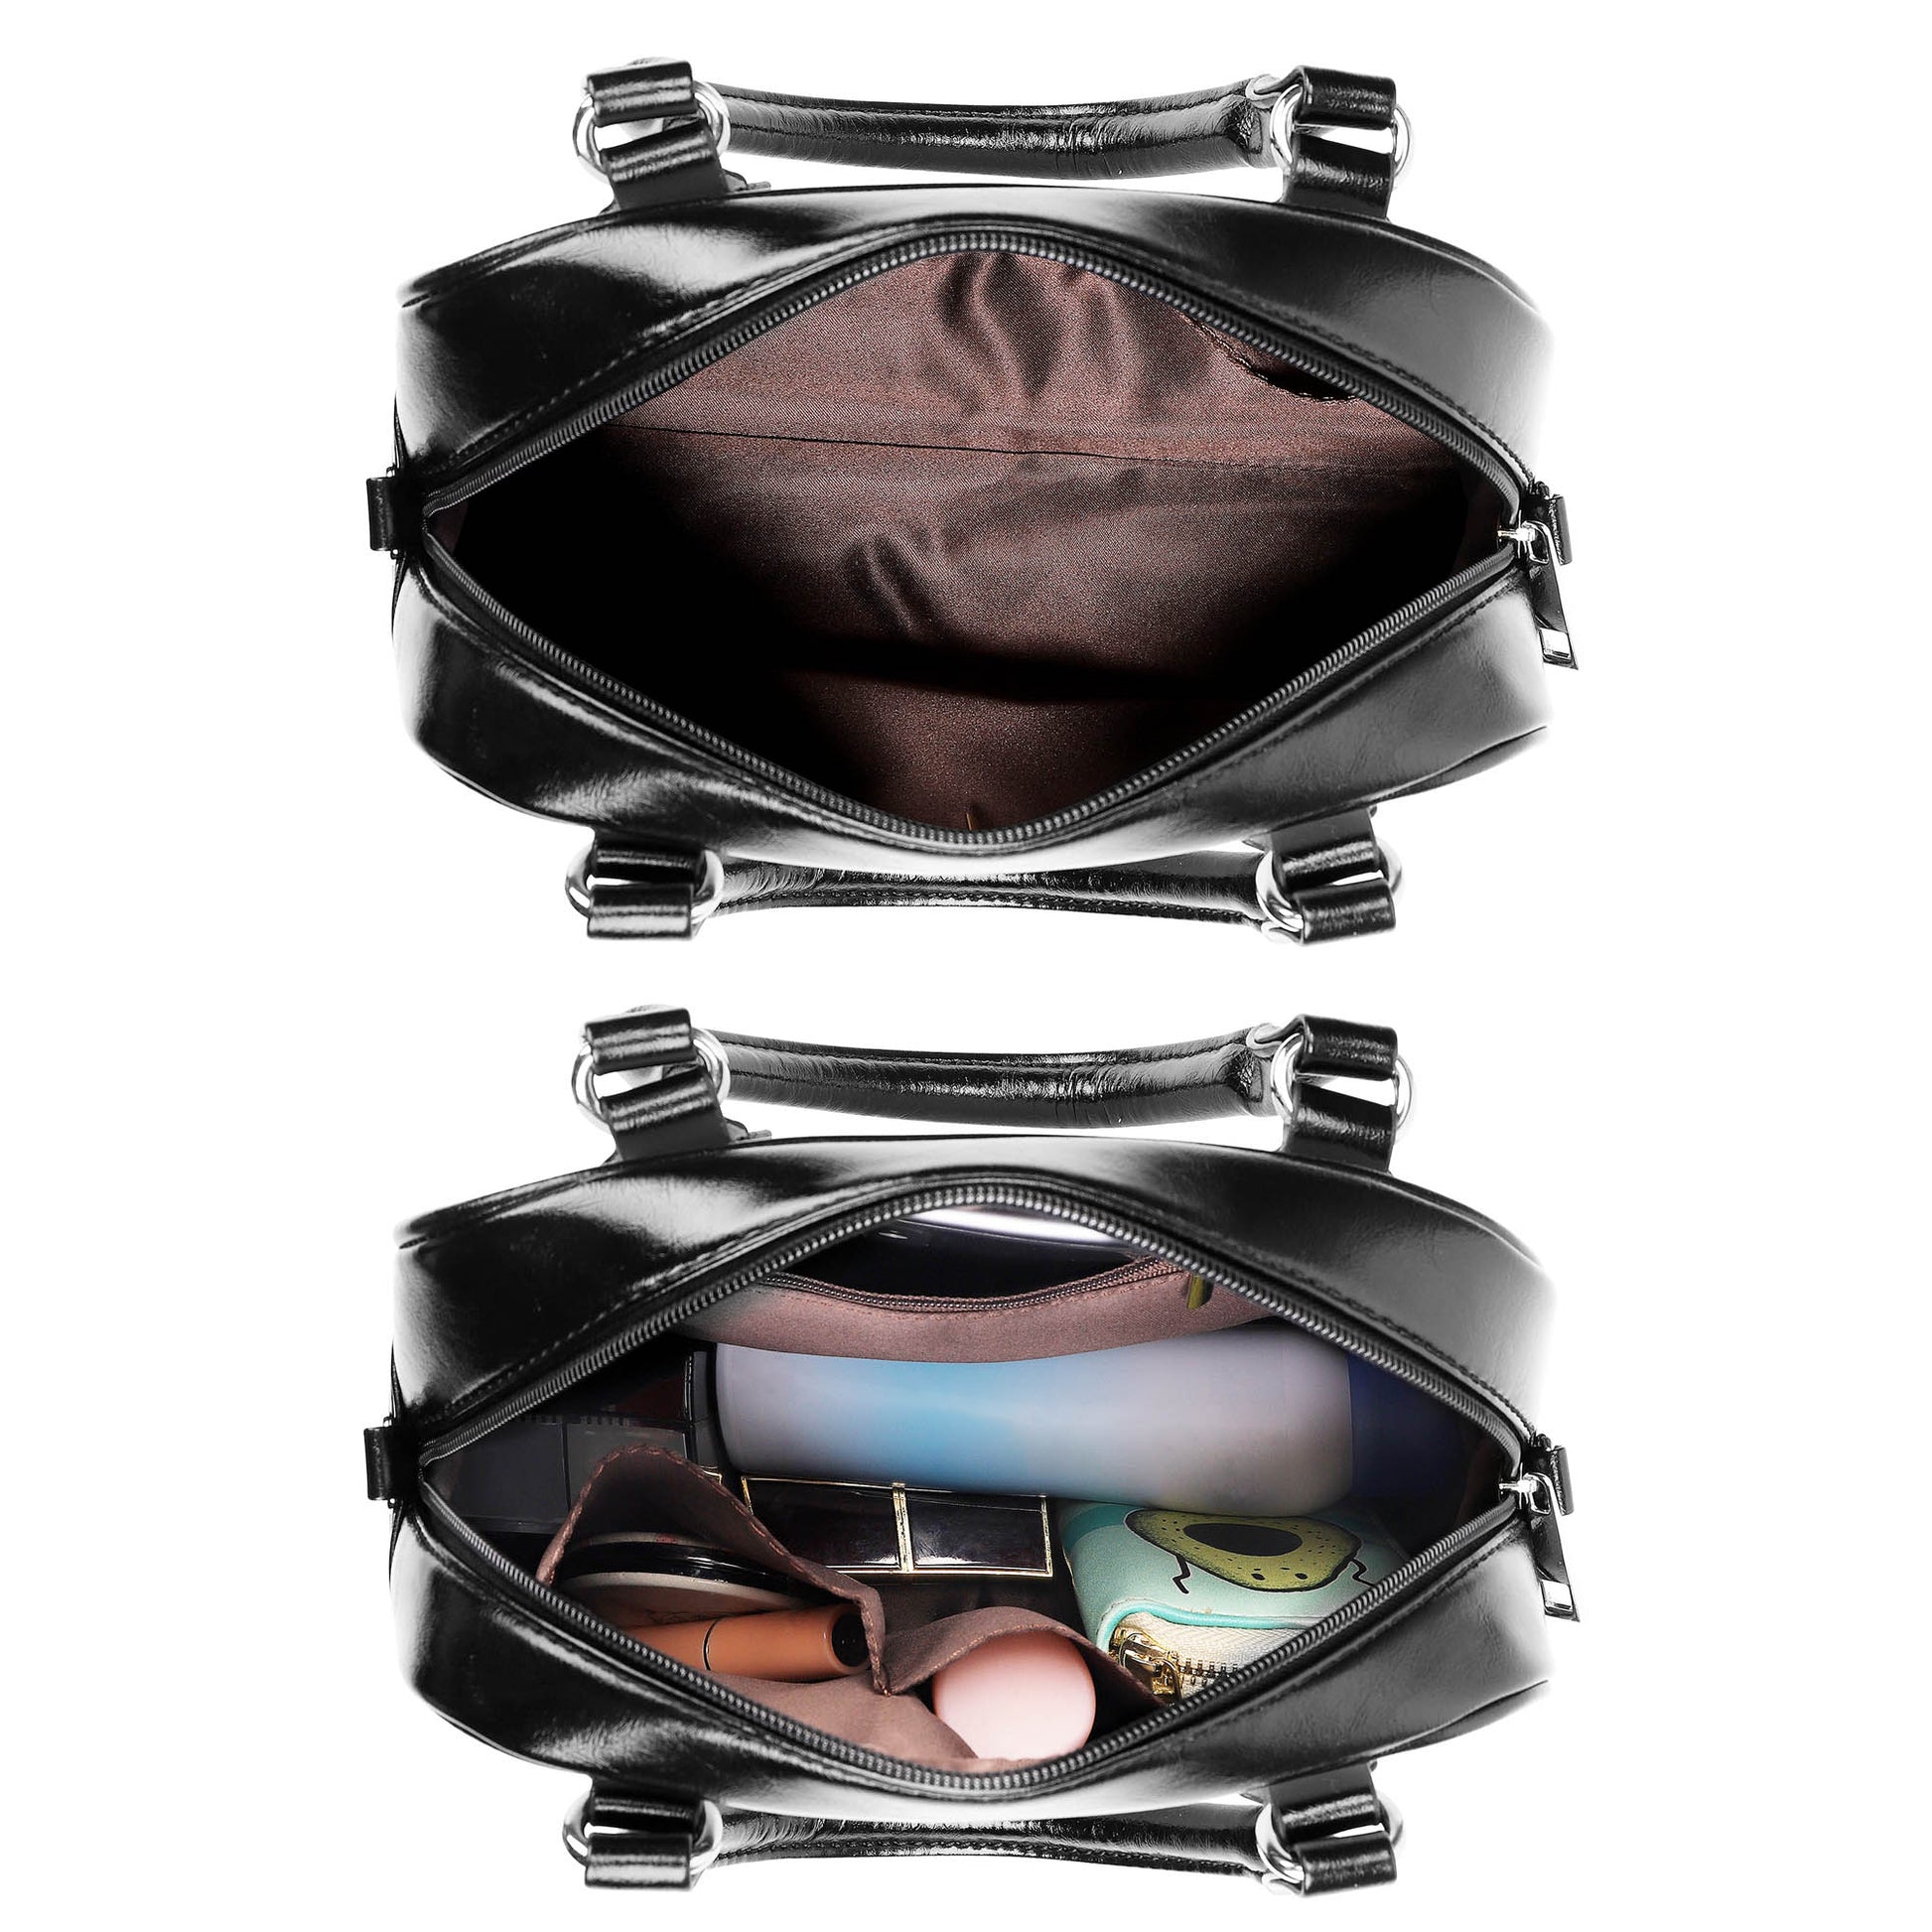 Wallace Weathered Tartan Shoulder Handbags with Family Crest - Tartanvibesclothing